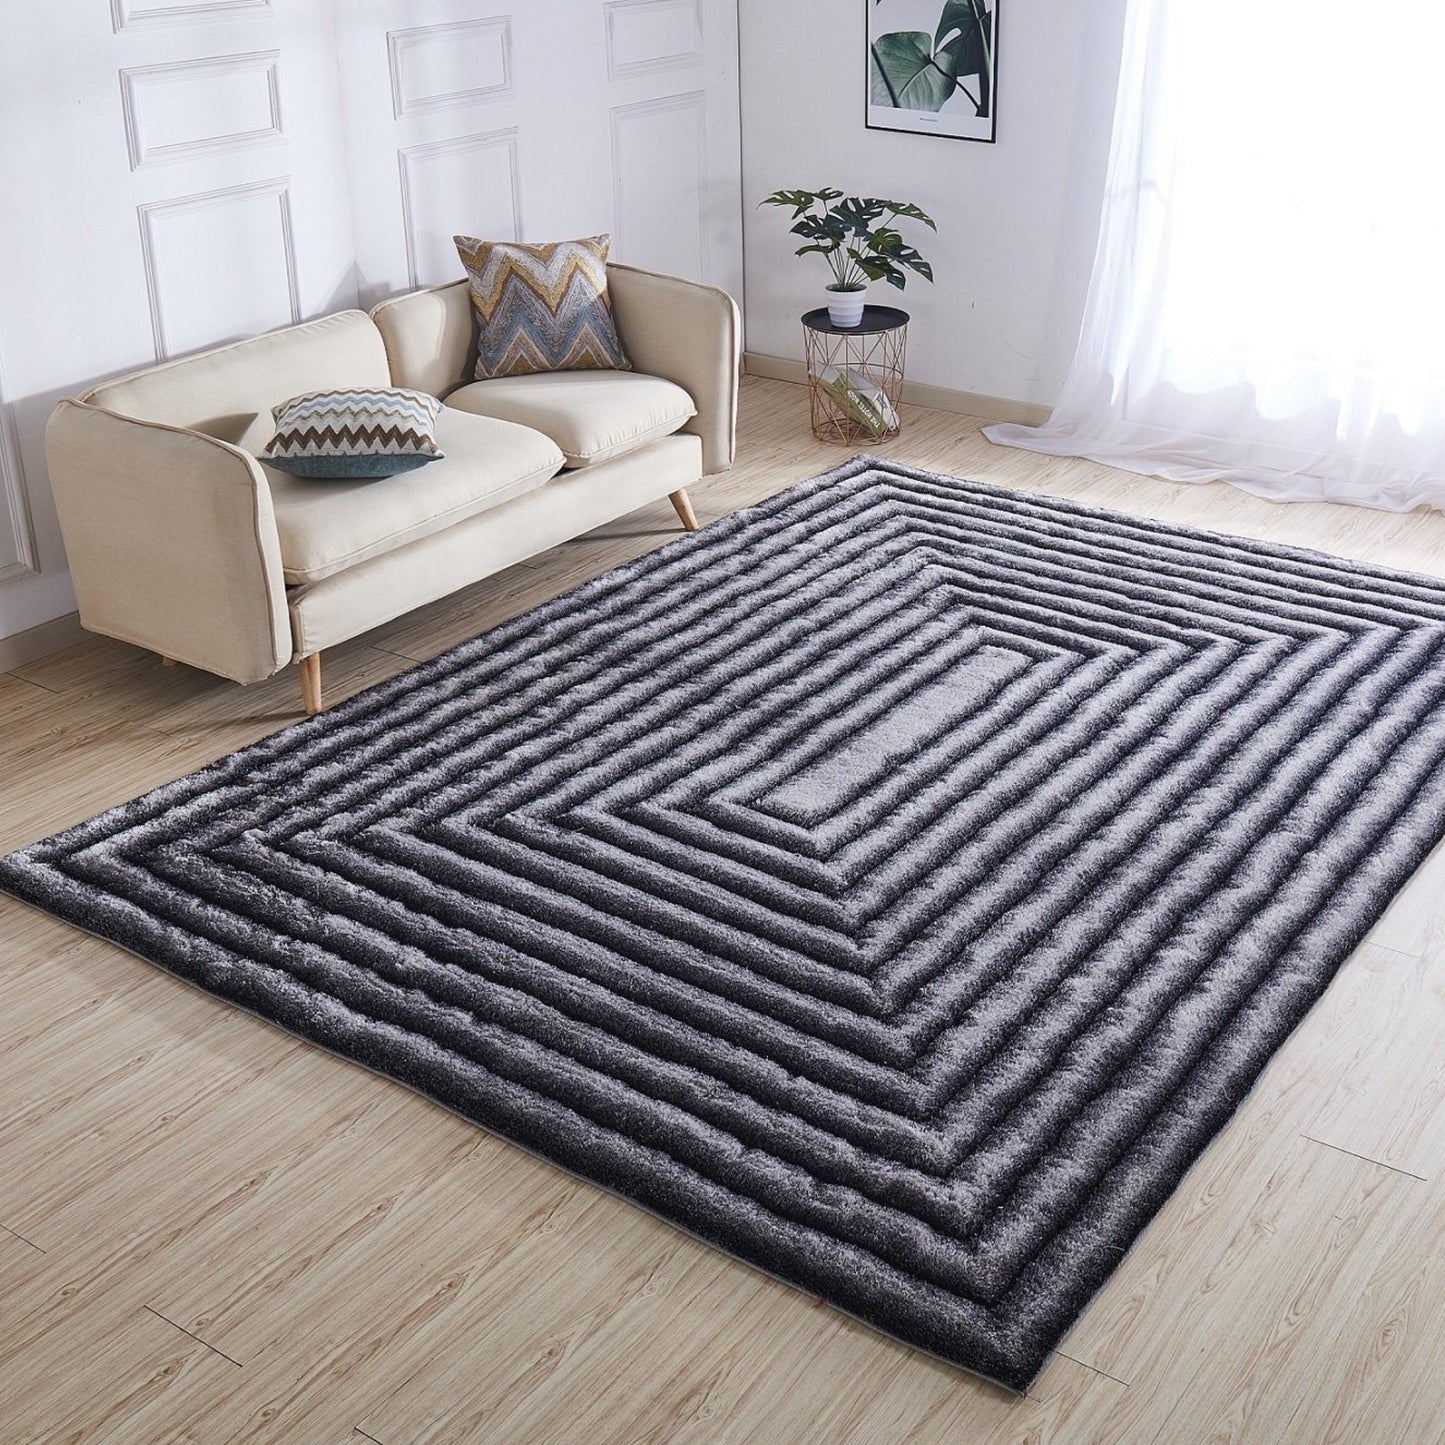 Soft Cozy Fluffy 3D Viscose Feel Geometric Design Shag Area Rug/Carpet 